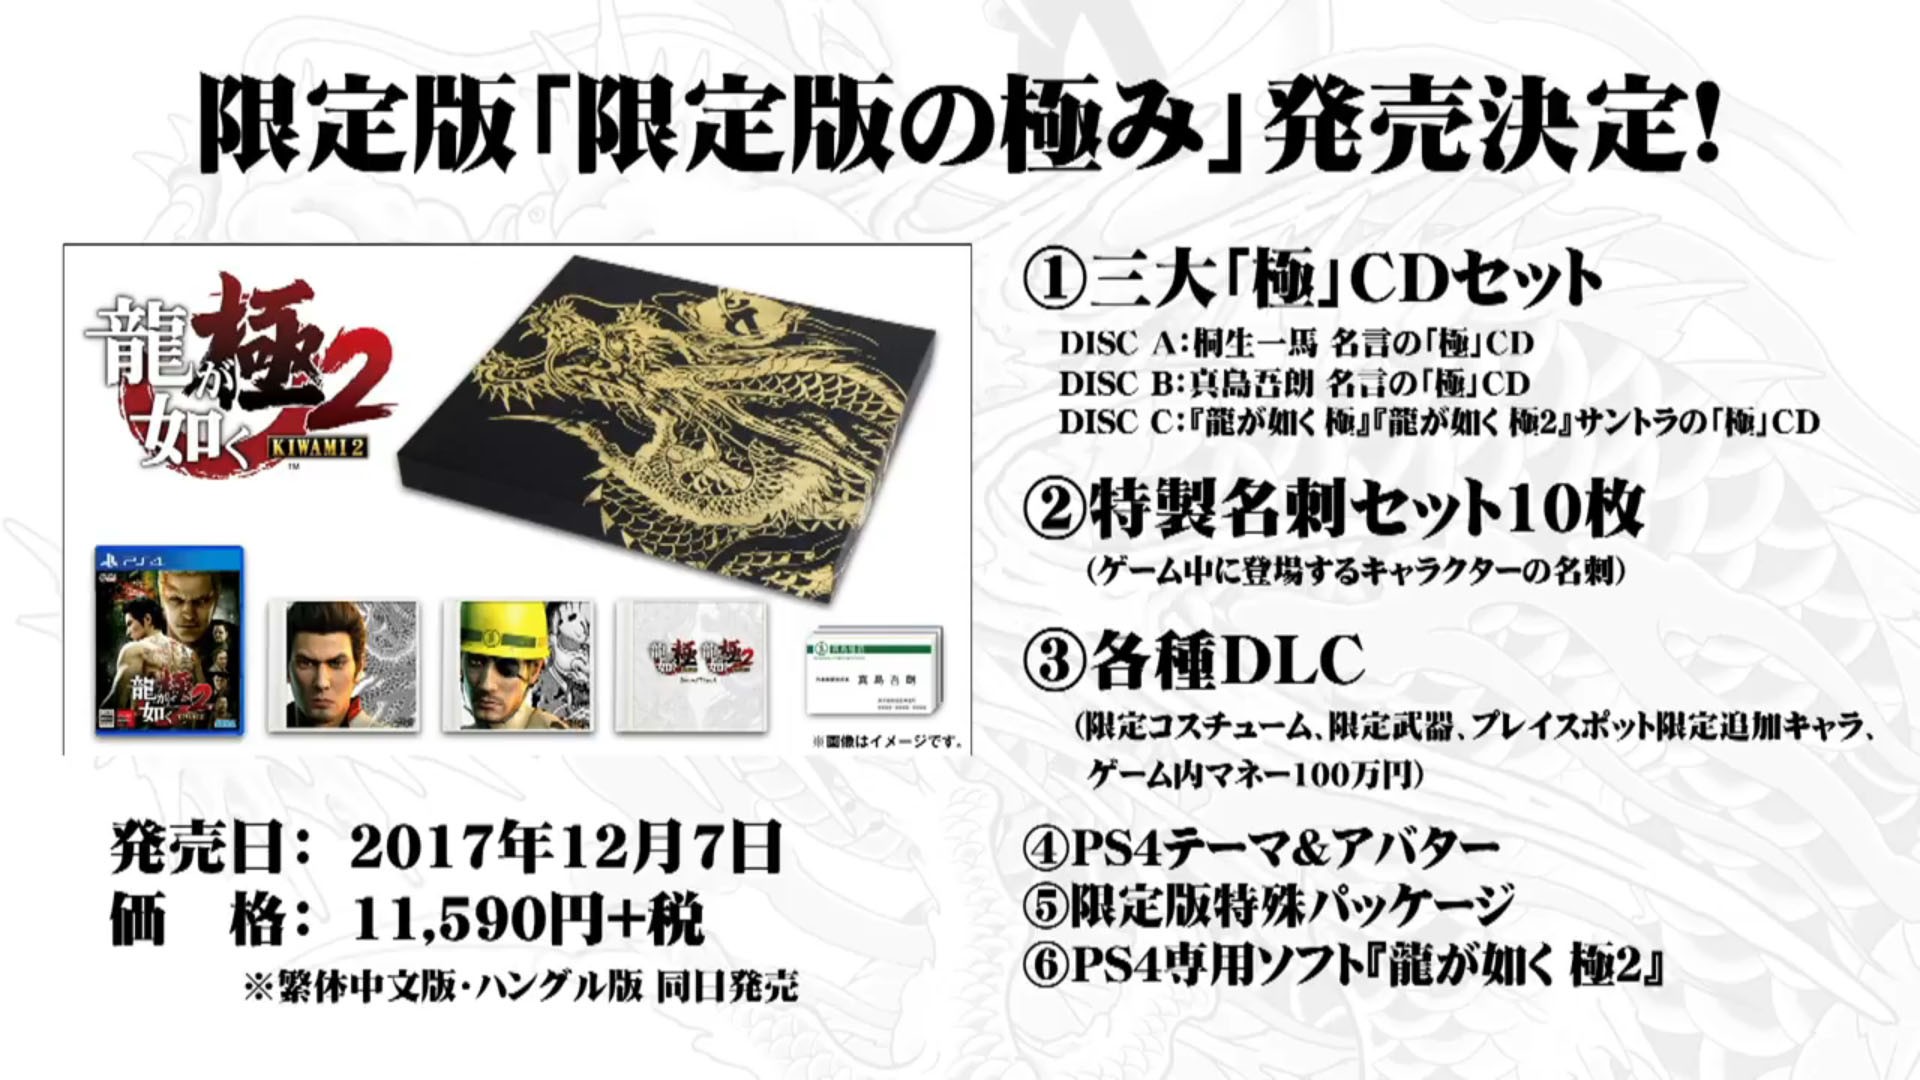 Якудза хантер 500. Коллекционное издание Yakuza. Yakuza Kiwami Steelbook. Yakuza Kiwami Sony ps4 диск. Yakuza Kiwami 2 OST.